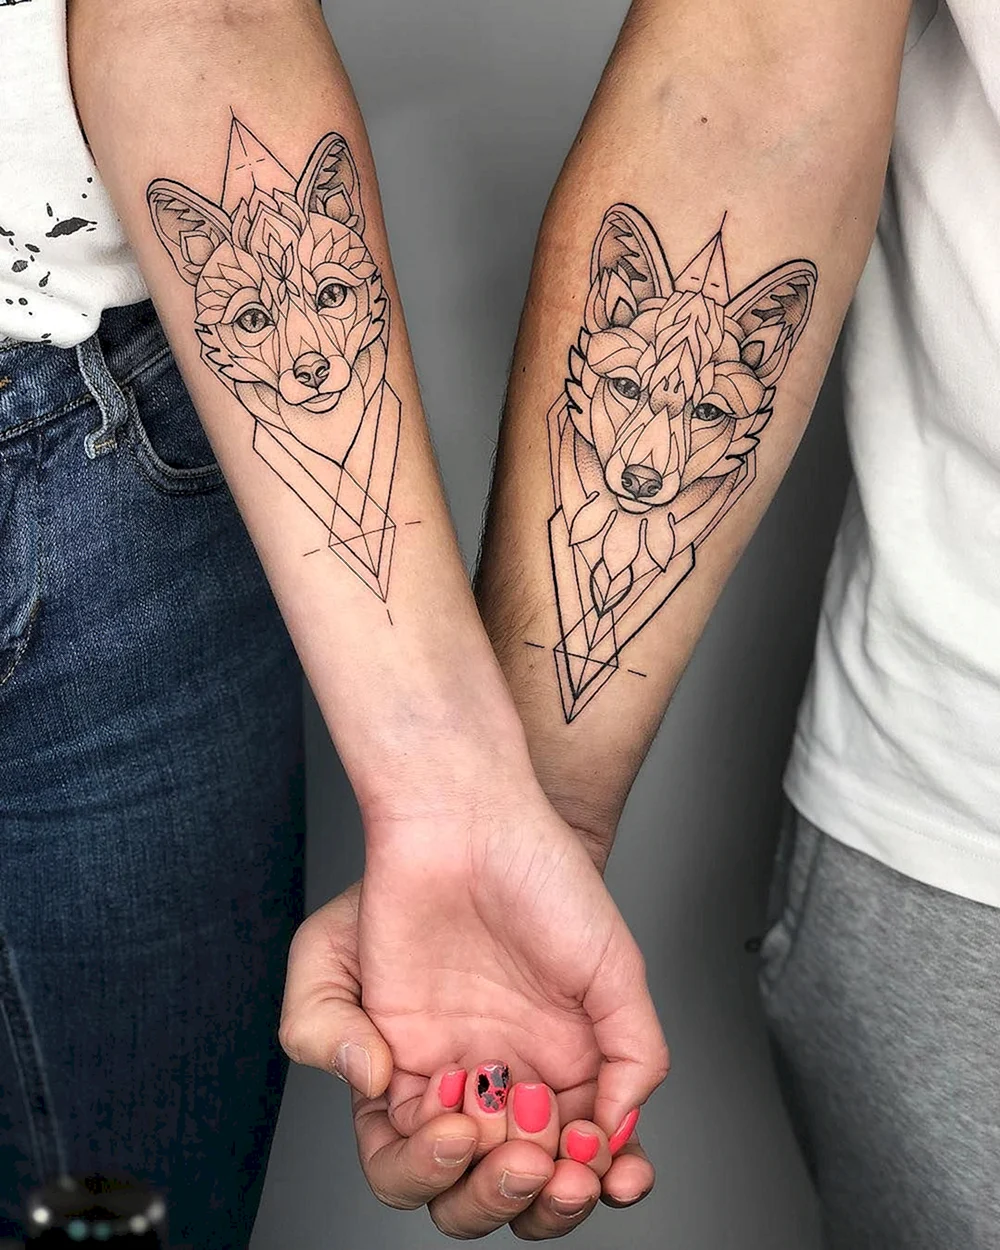 Tattoo paired